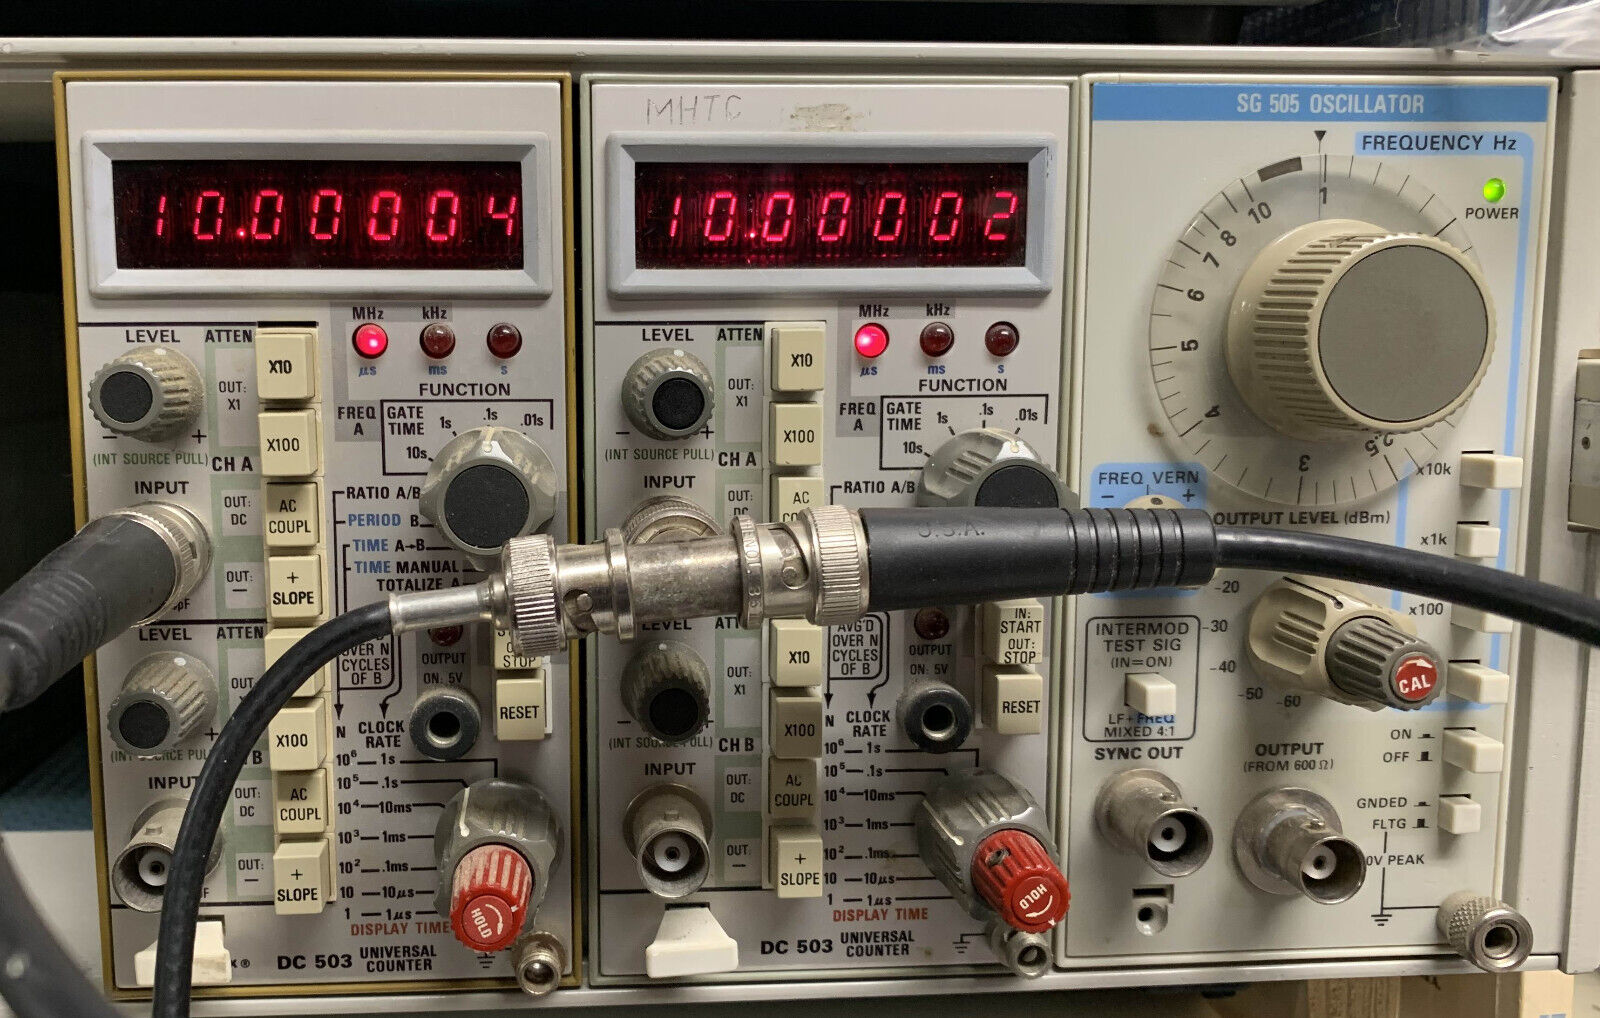 Tek DC 503 Universal Counter Plugin Module for TM500 Series Mainframes